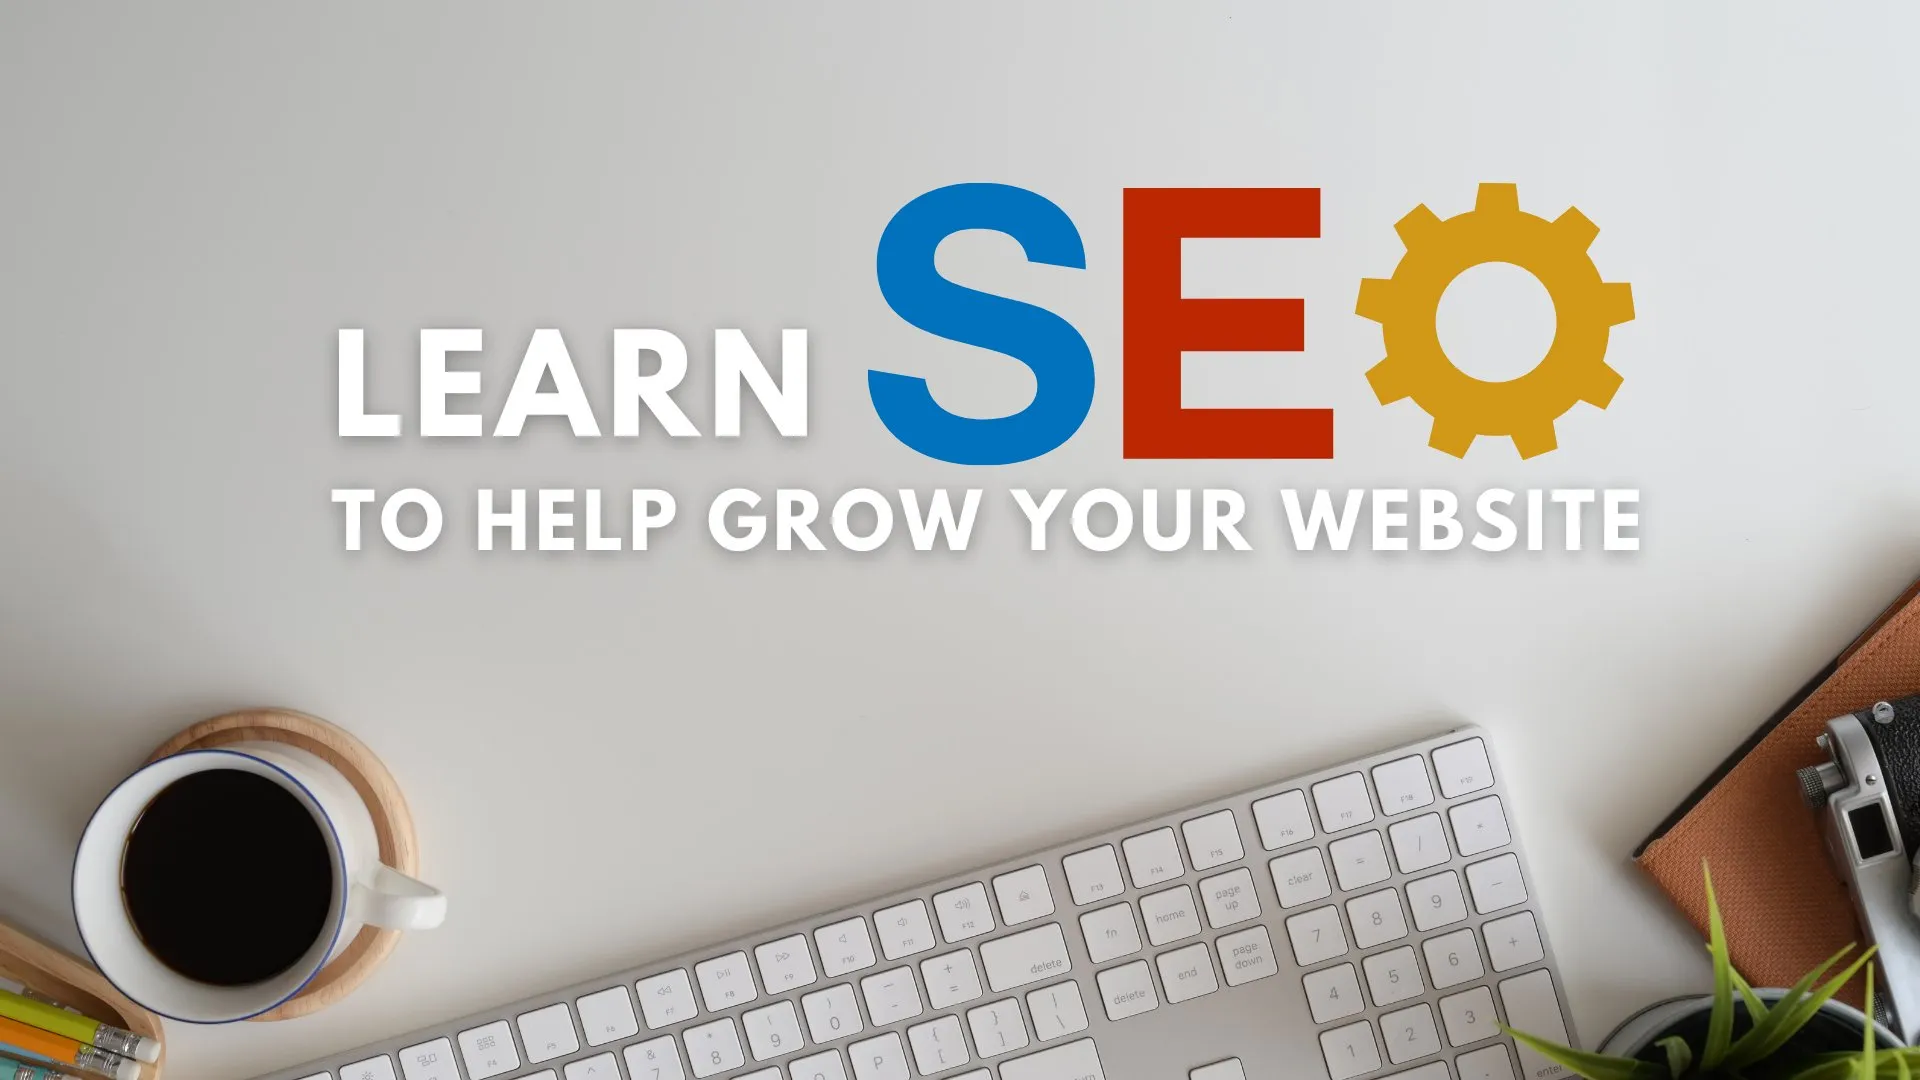 Learn SEO to help grow your website